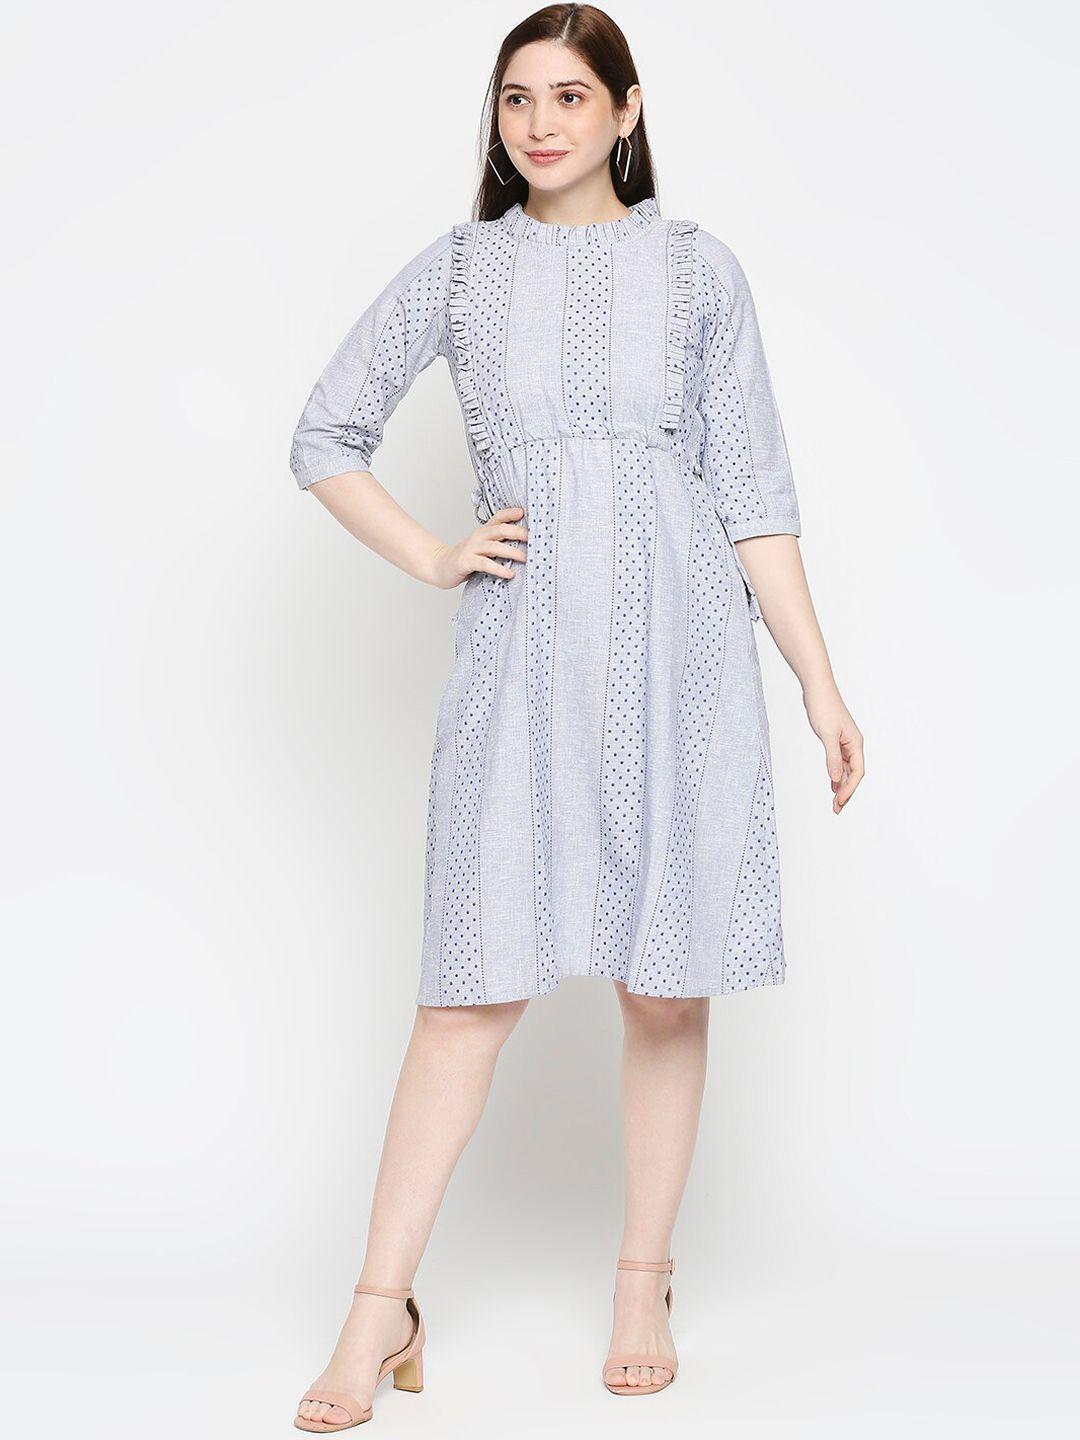 kuber studio grey polka dots printed ruffles cotton fit & flare dress